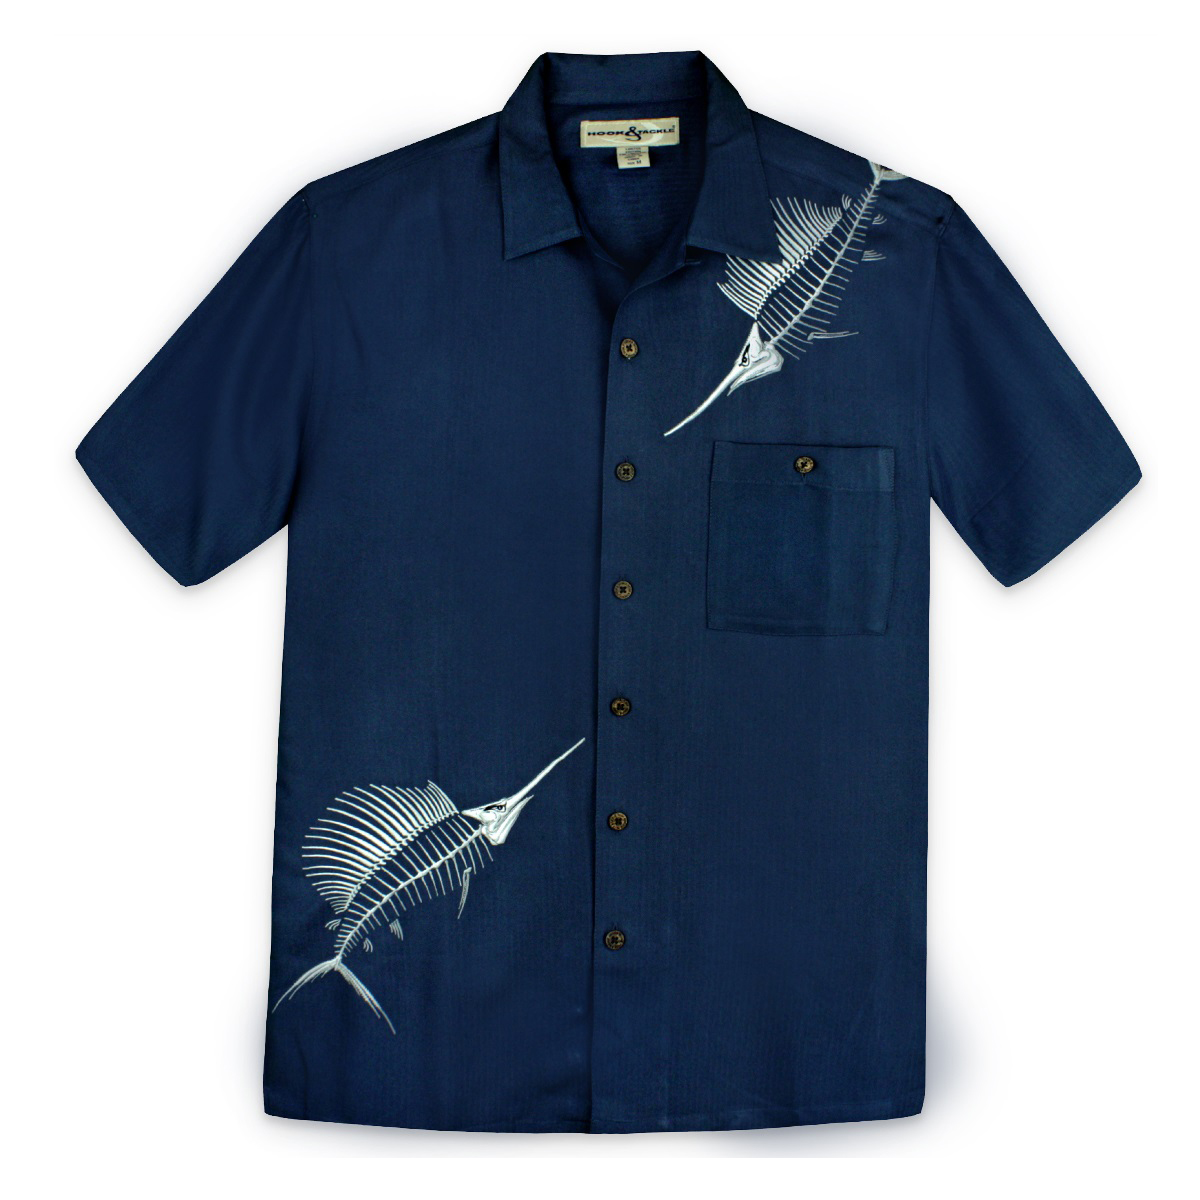 https://tropaholic.com/wp-content/uploads/2015/08/Mens-Resort-Shirt-Hook-Tackle-Sailfish-Bones-Navy-Blue-1.jpg